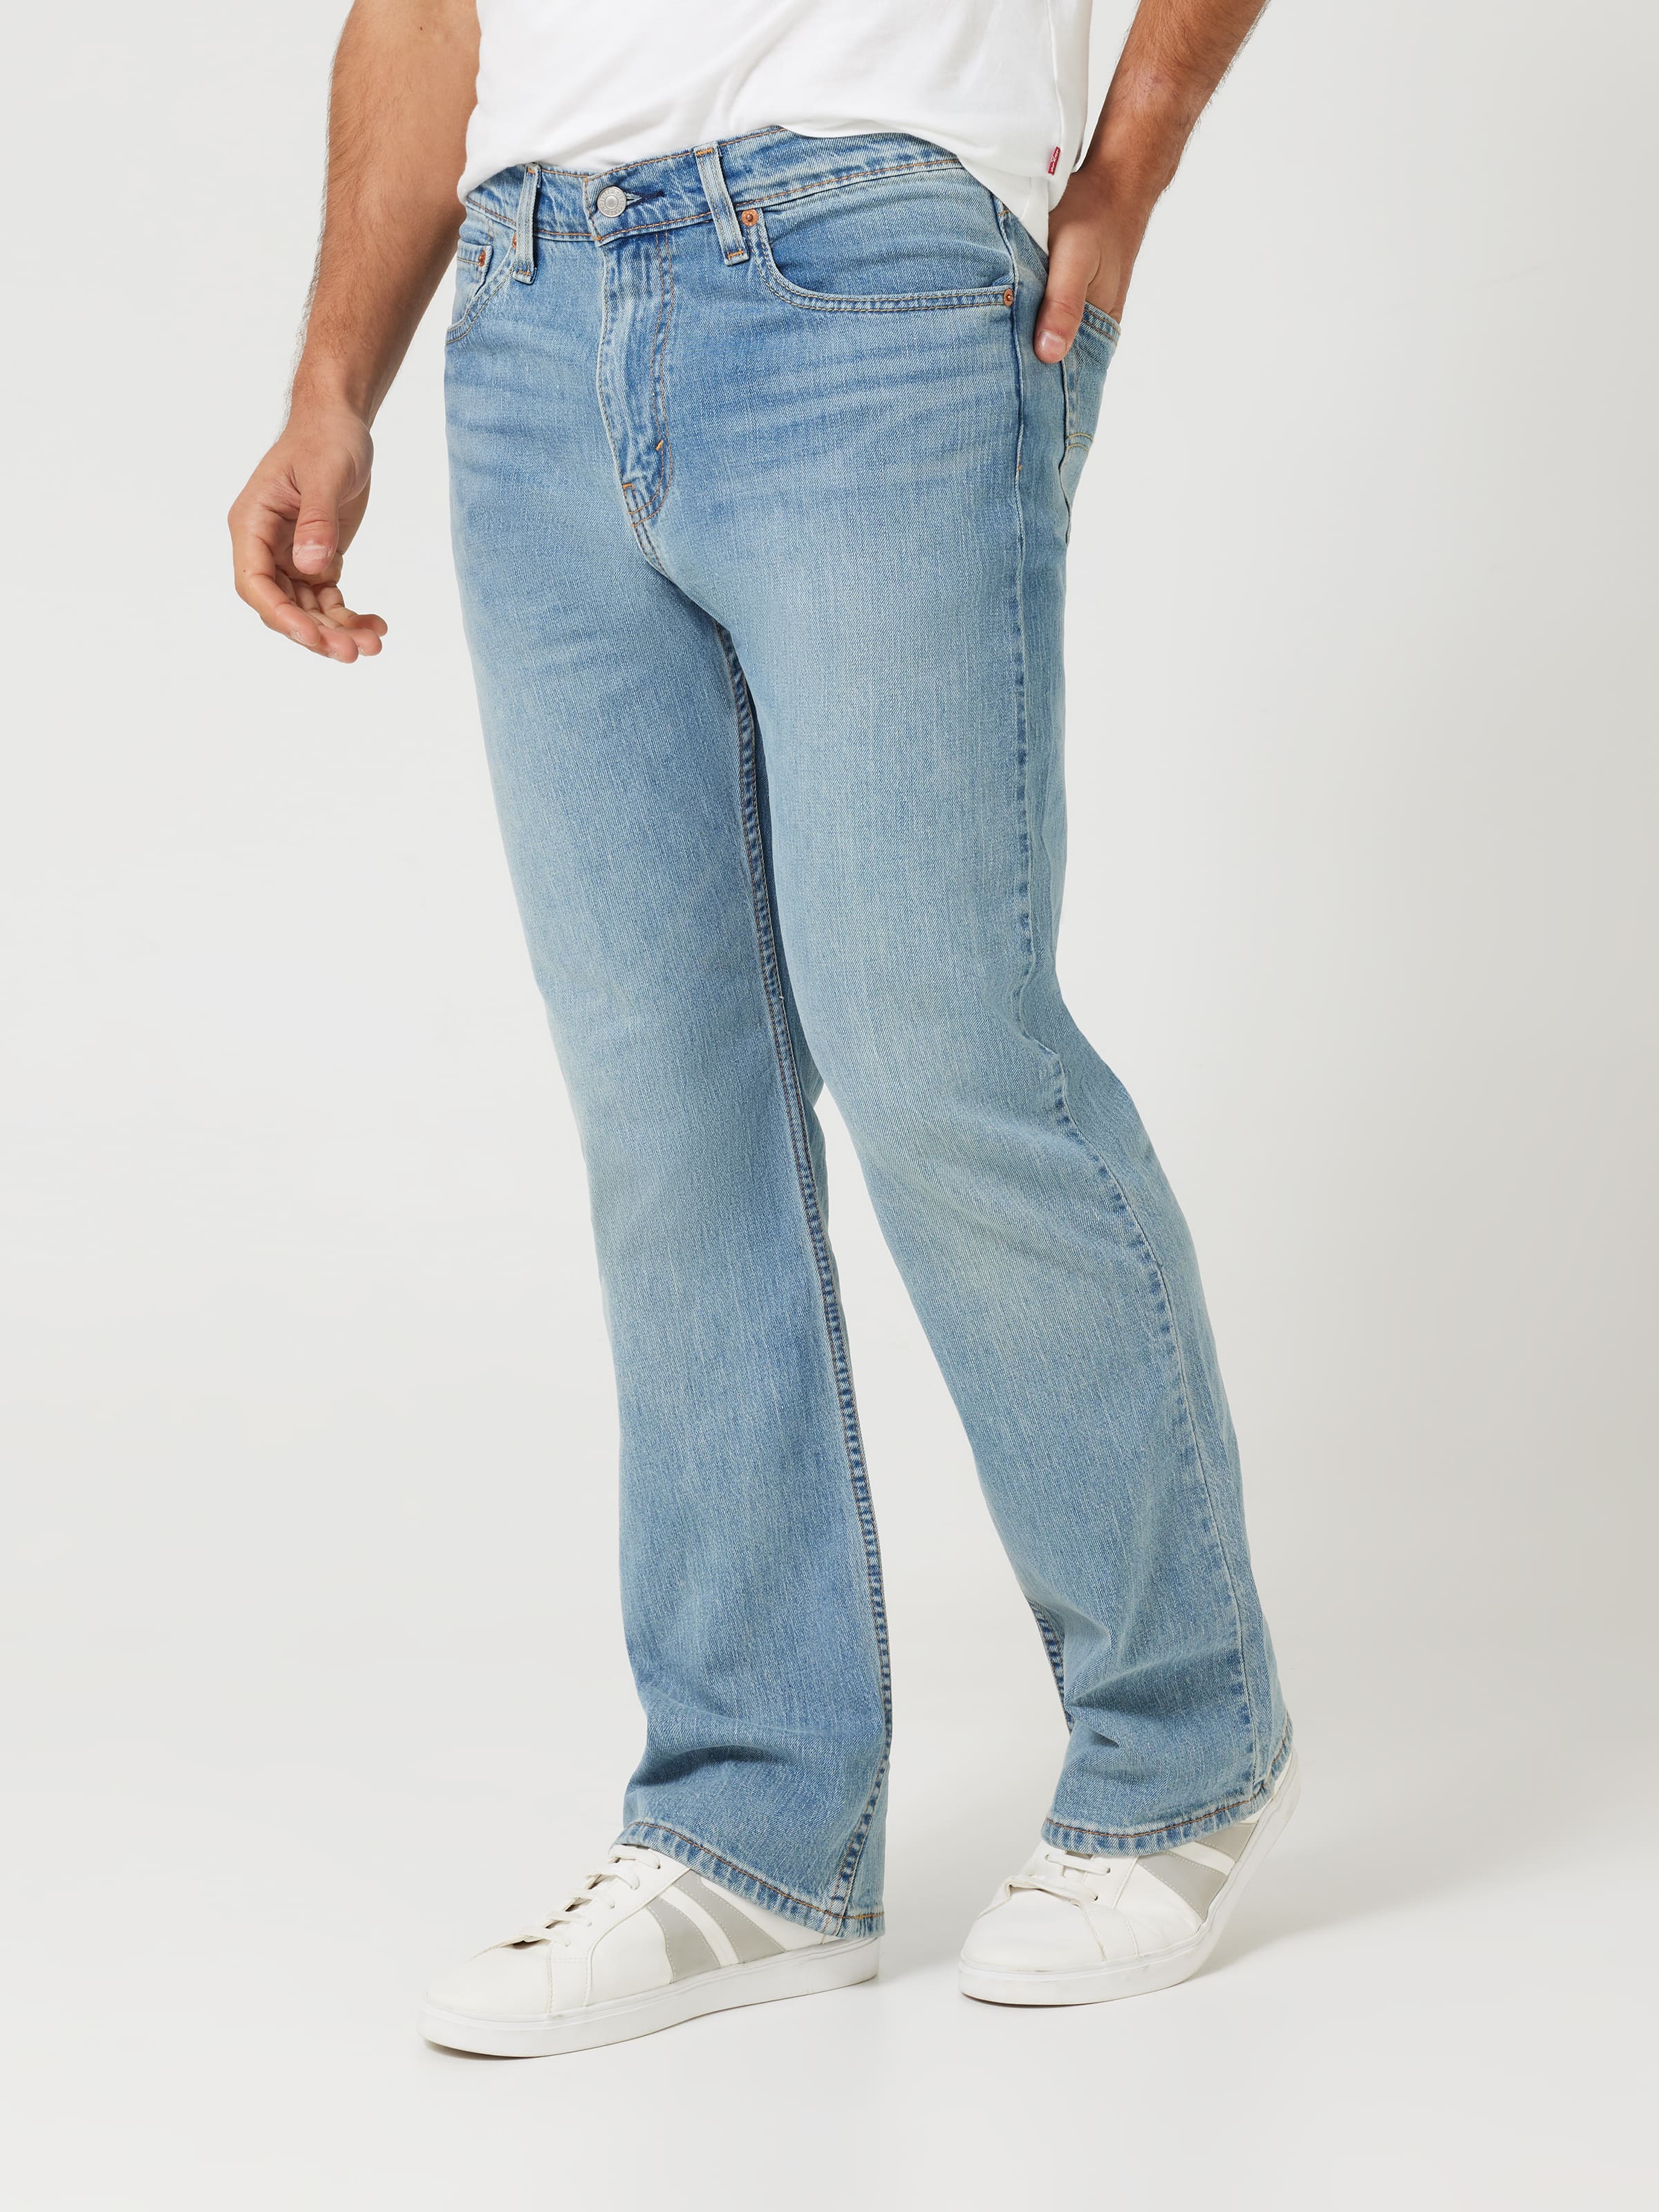 Bootcut Jeans Mens Style Poland, SAVE 49% - mpgc.net